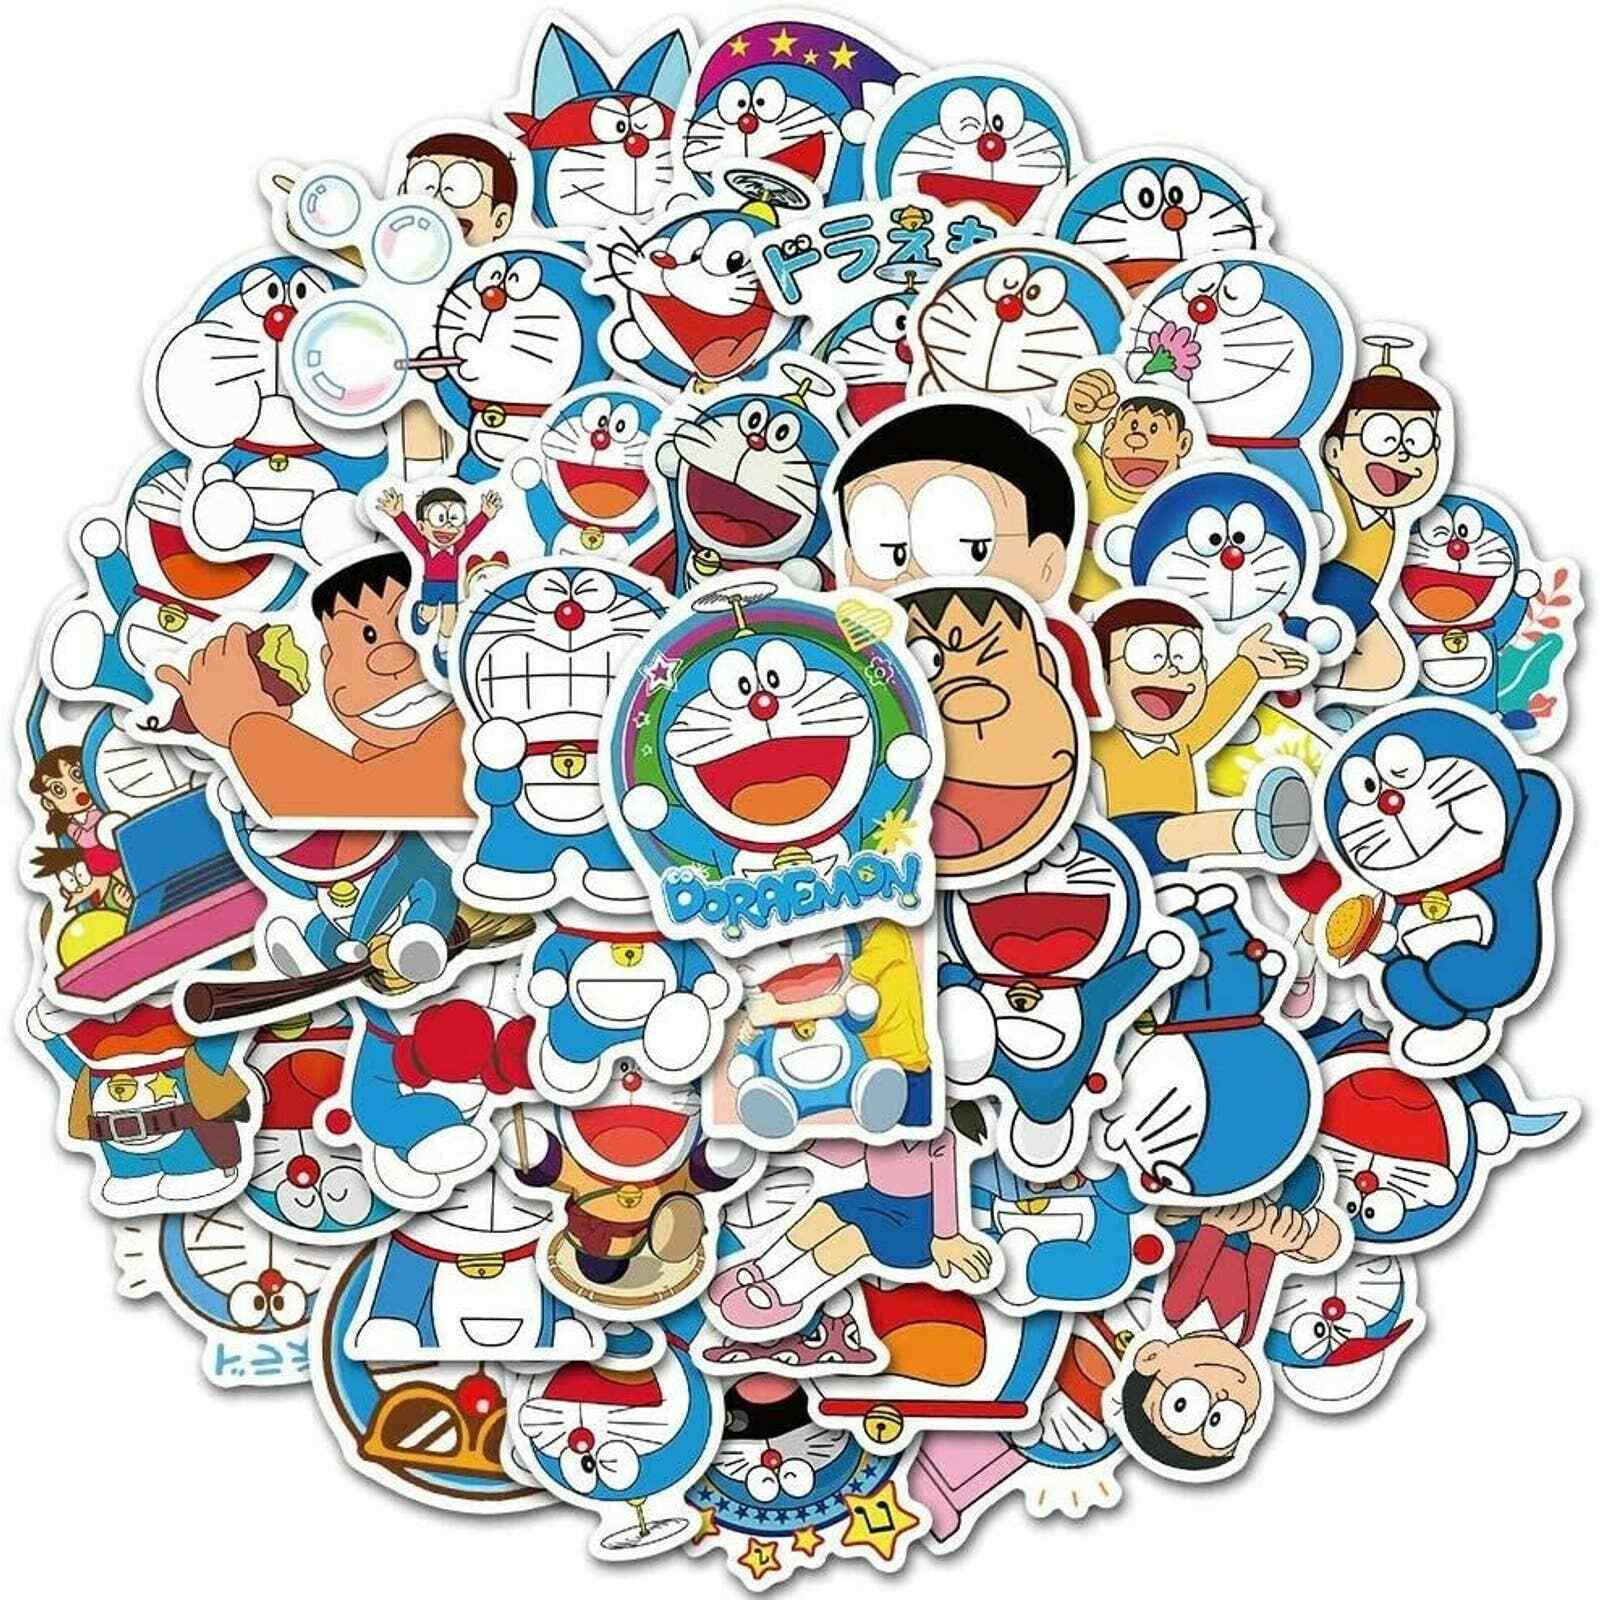 Doraemon Stickers 25pc Cute Kawaii Anime Japanese Cartoon Robot Cat